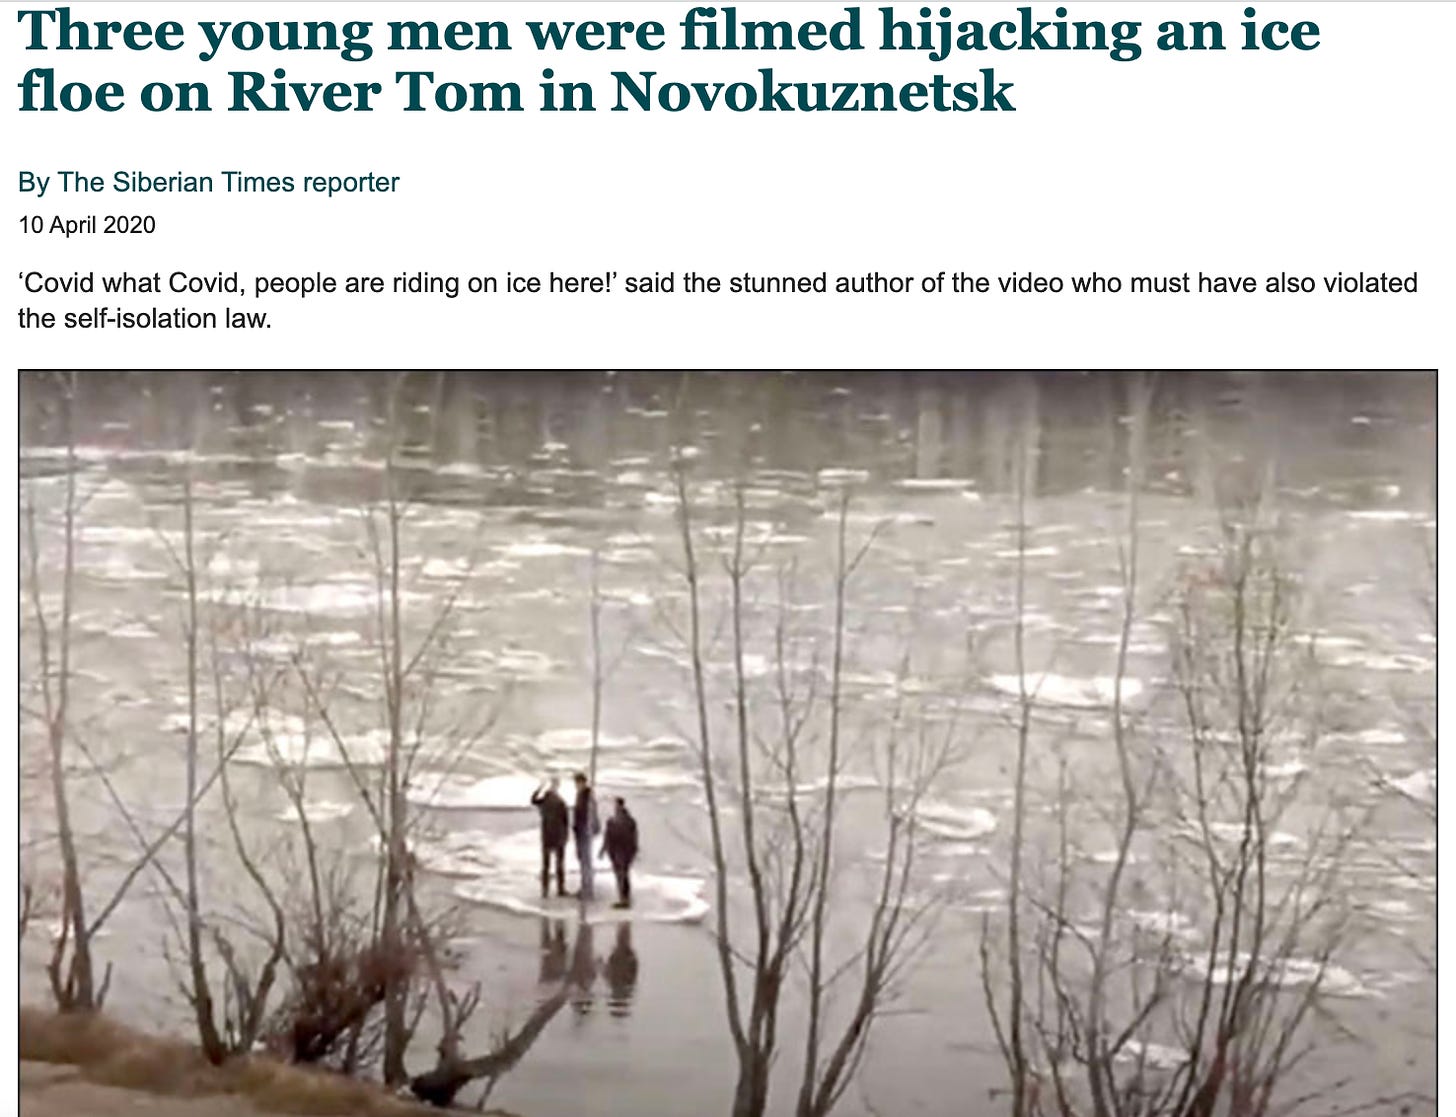 Newspaper headline: Three young men were filmed hijacking an ice floe on River Tom in Novokuznetsk.